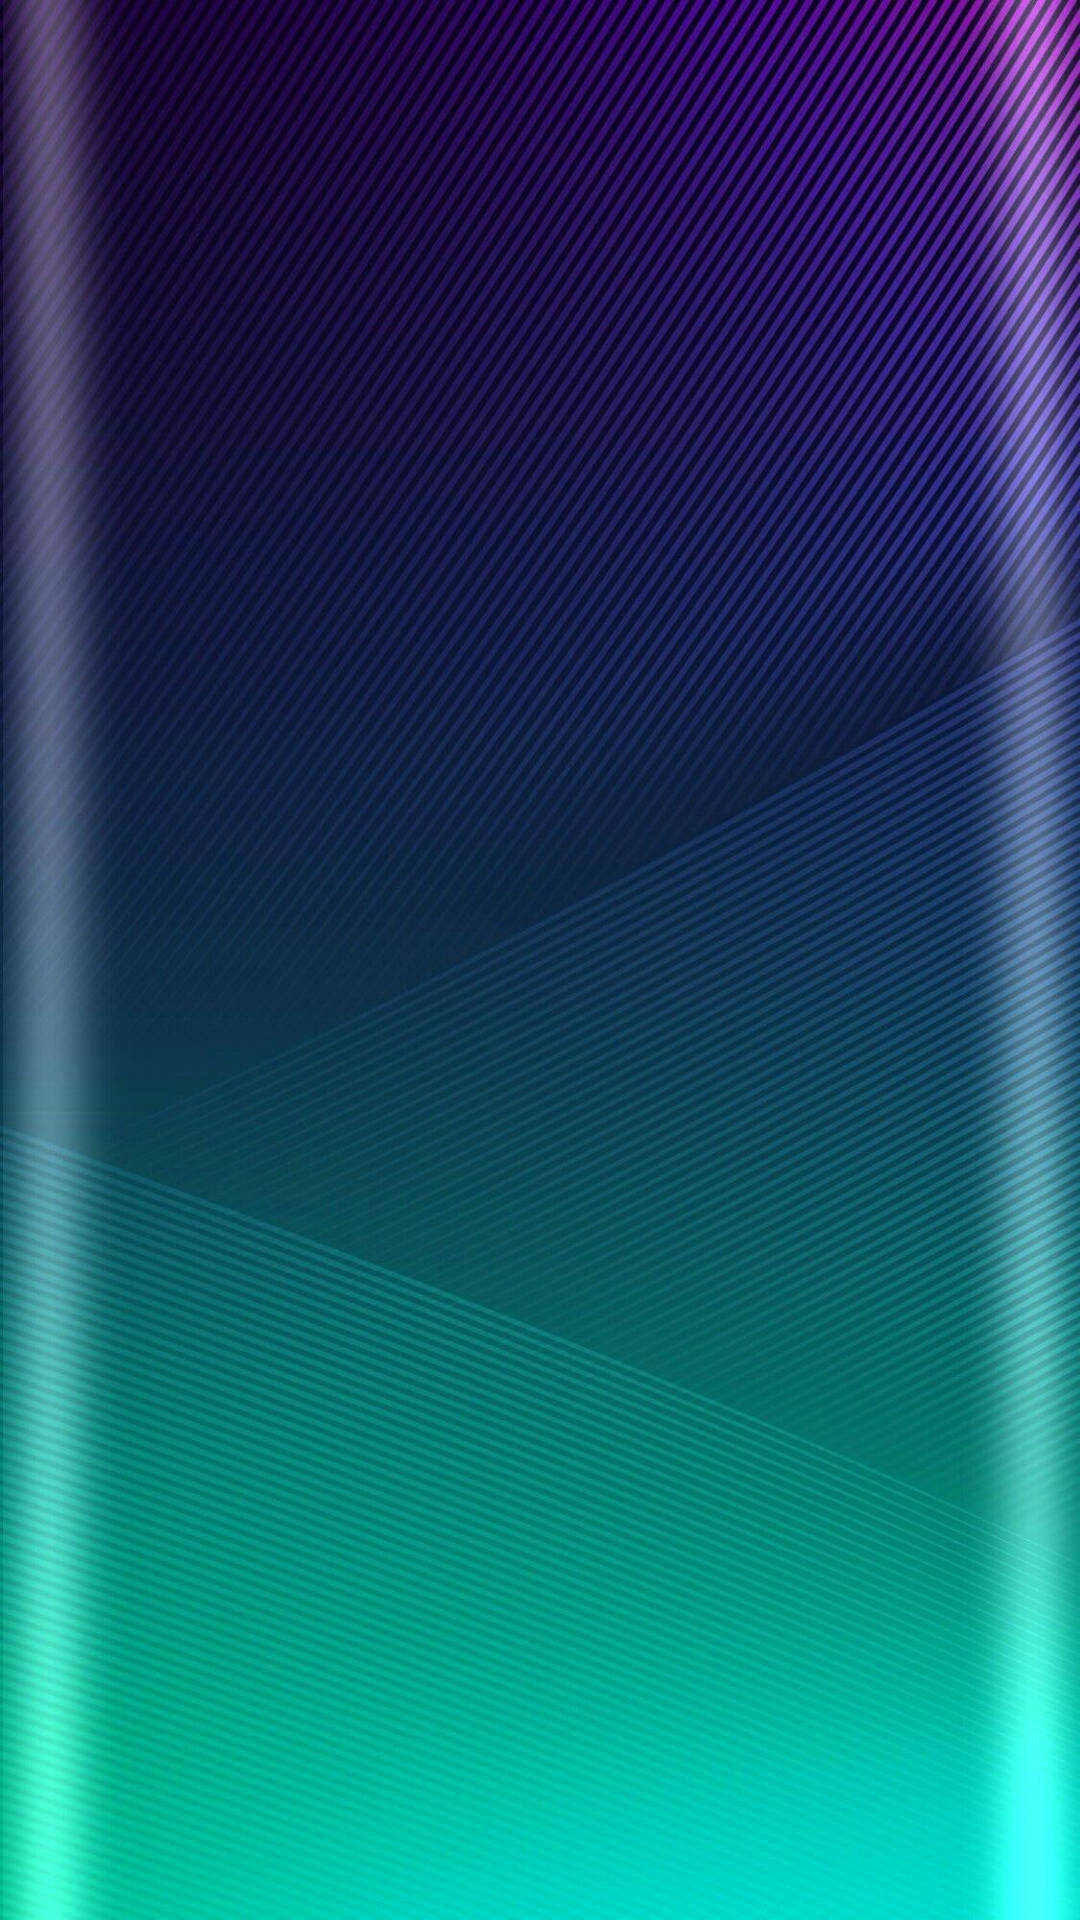 Sleek Samsung Edge Home Screen Wallpaper